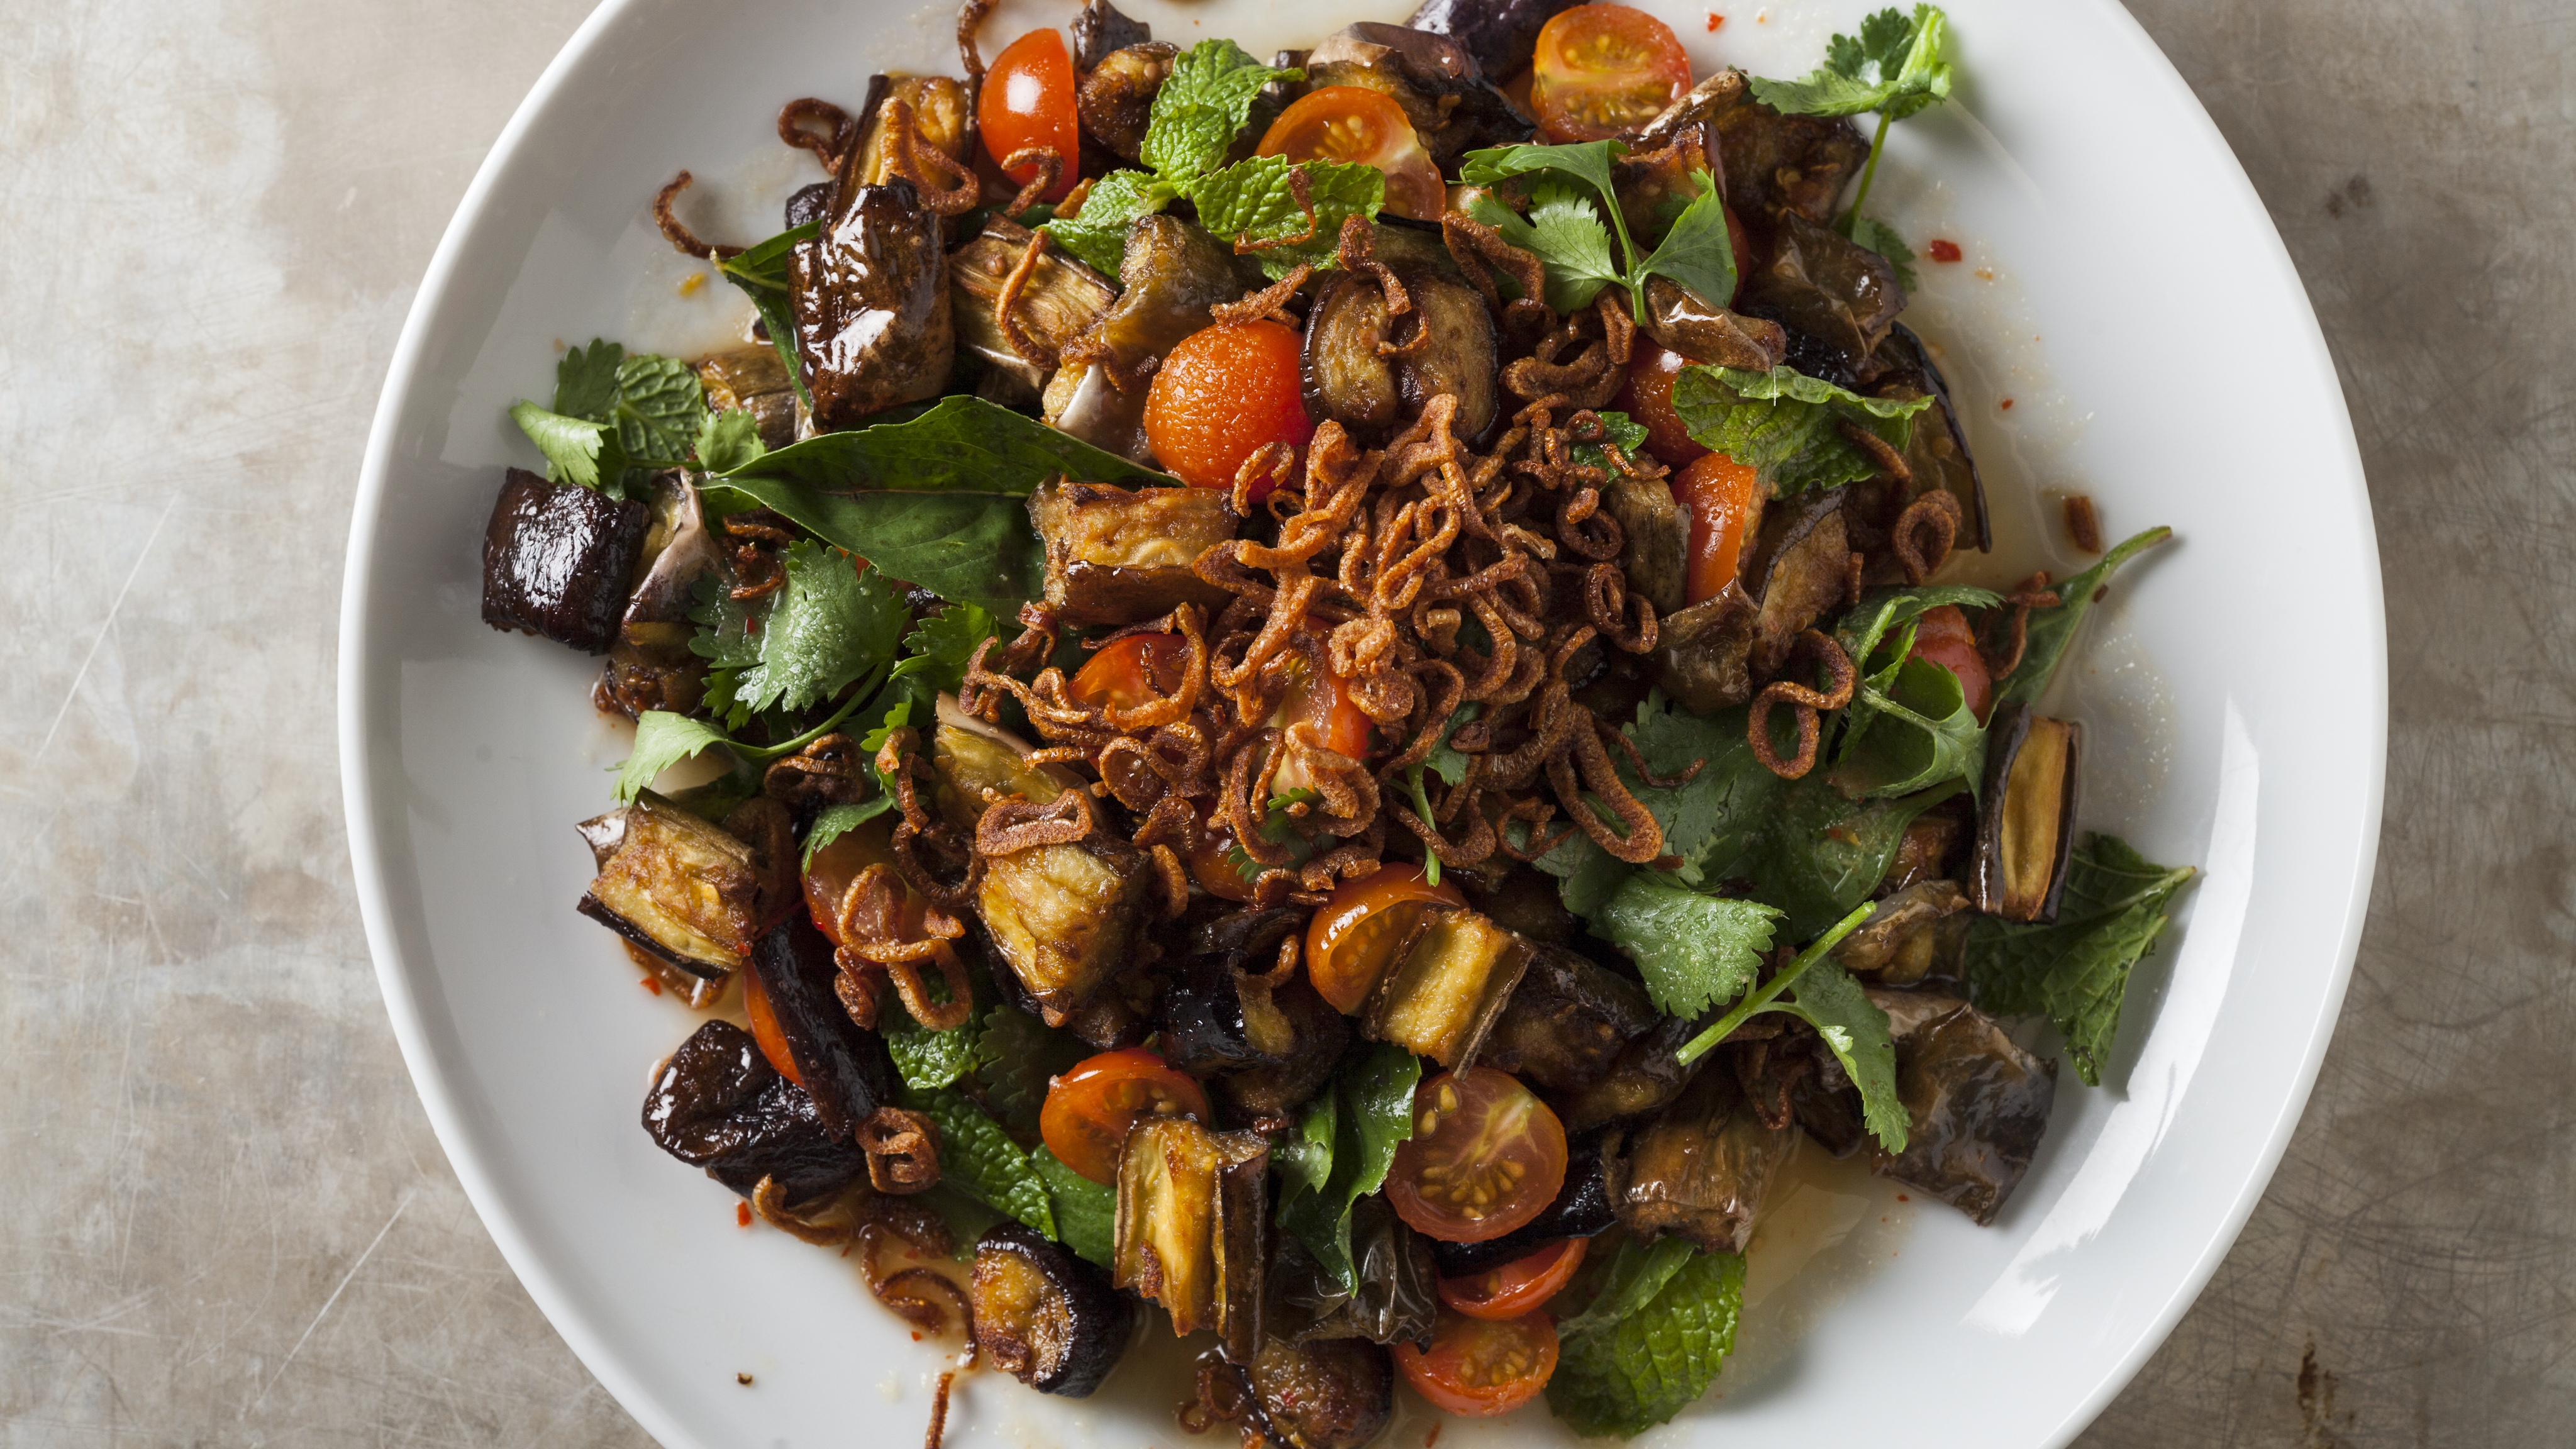 Join the test kitchen for Crispy Thai Eggplant Salad